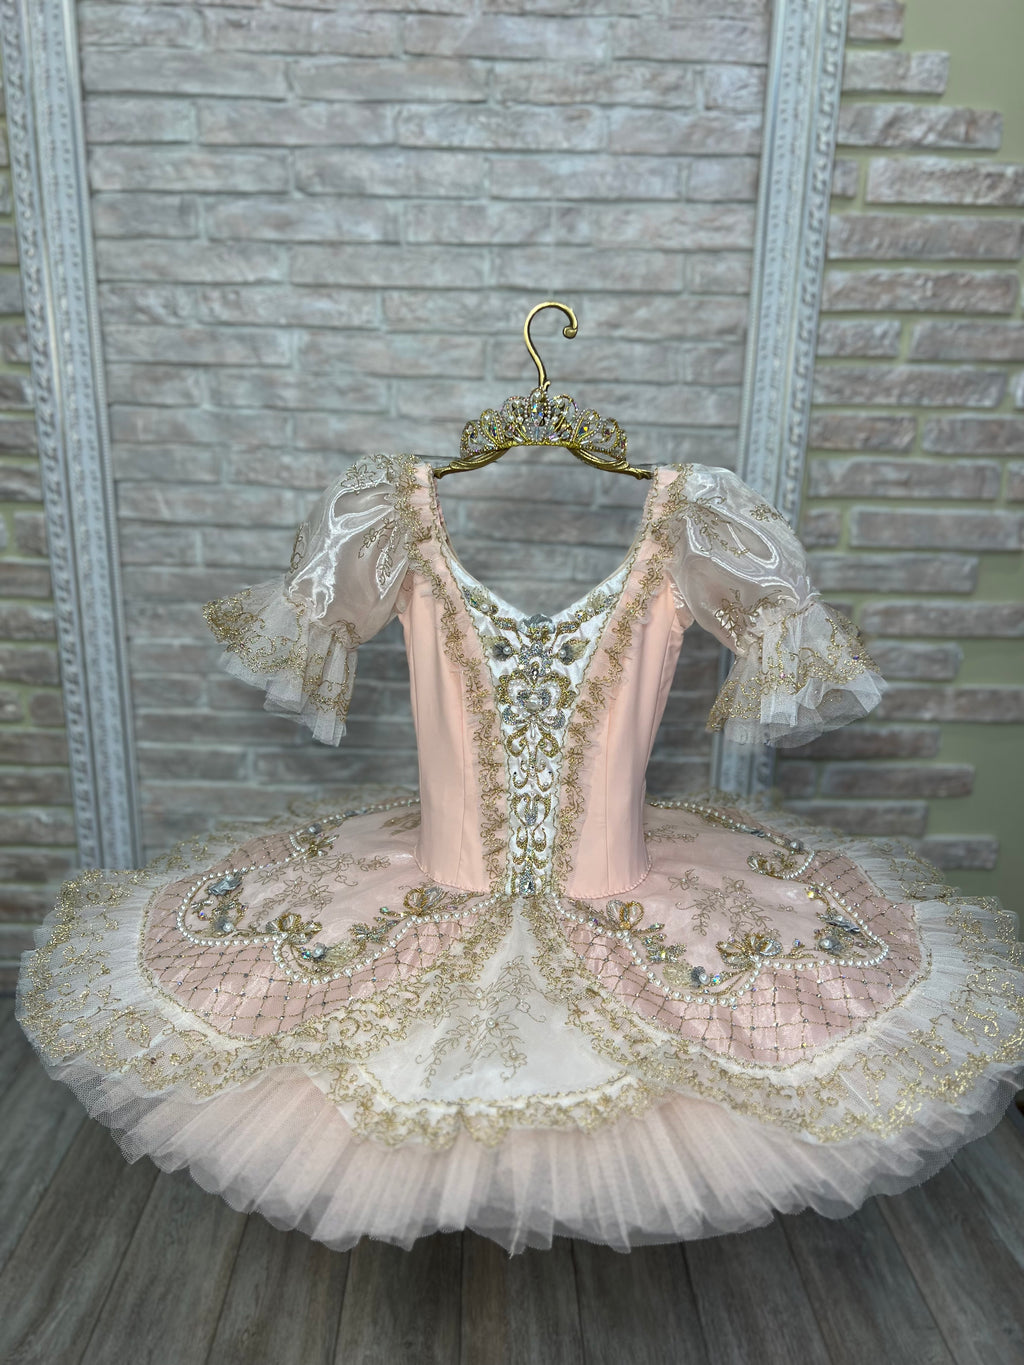 Sleeping Beauty First Entrance - Dancewear by Patricia